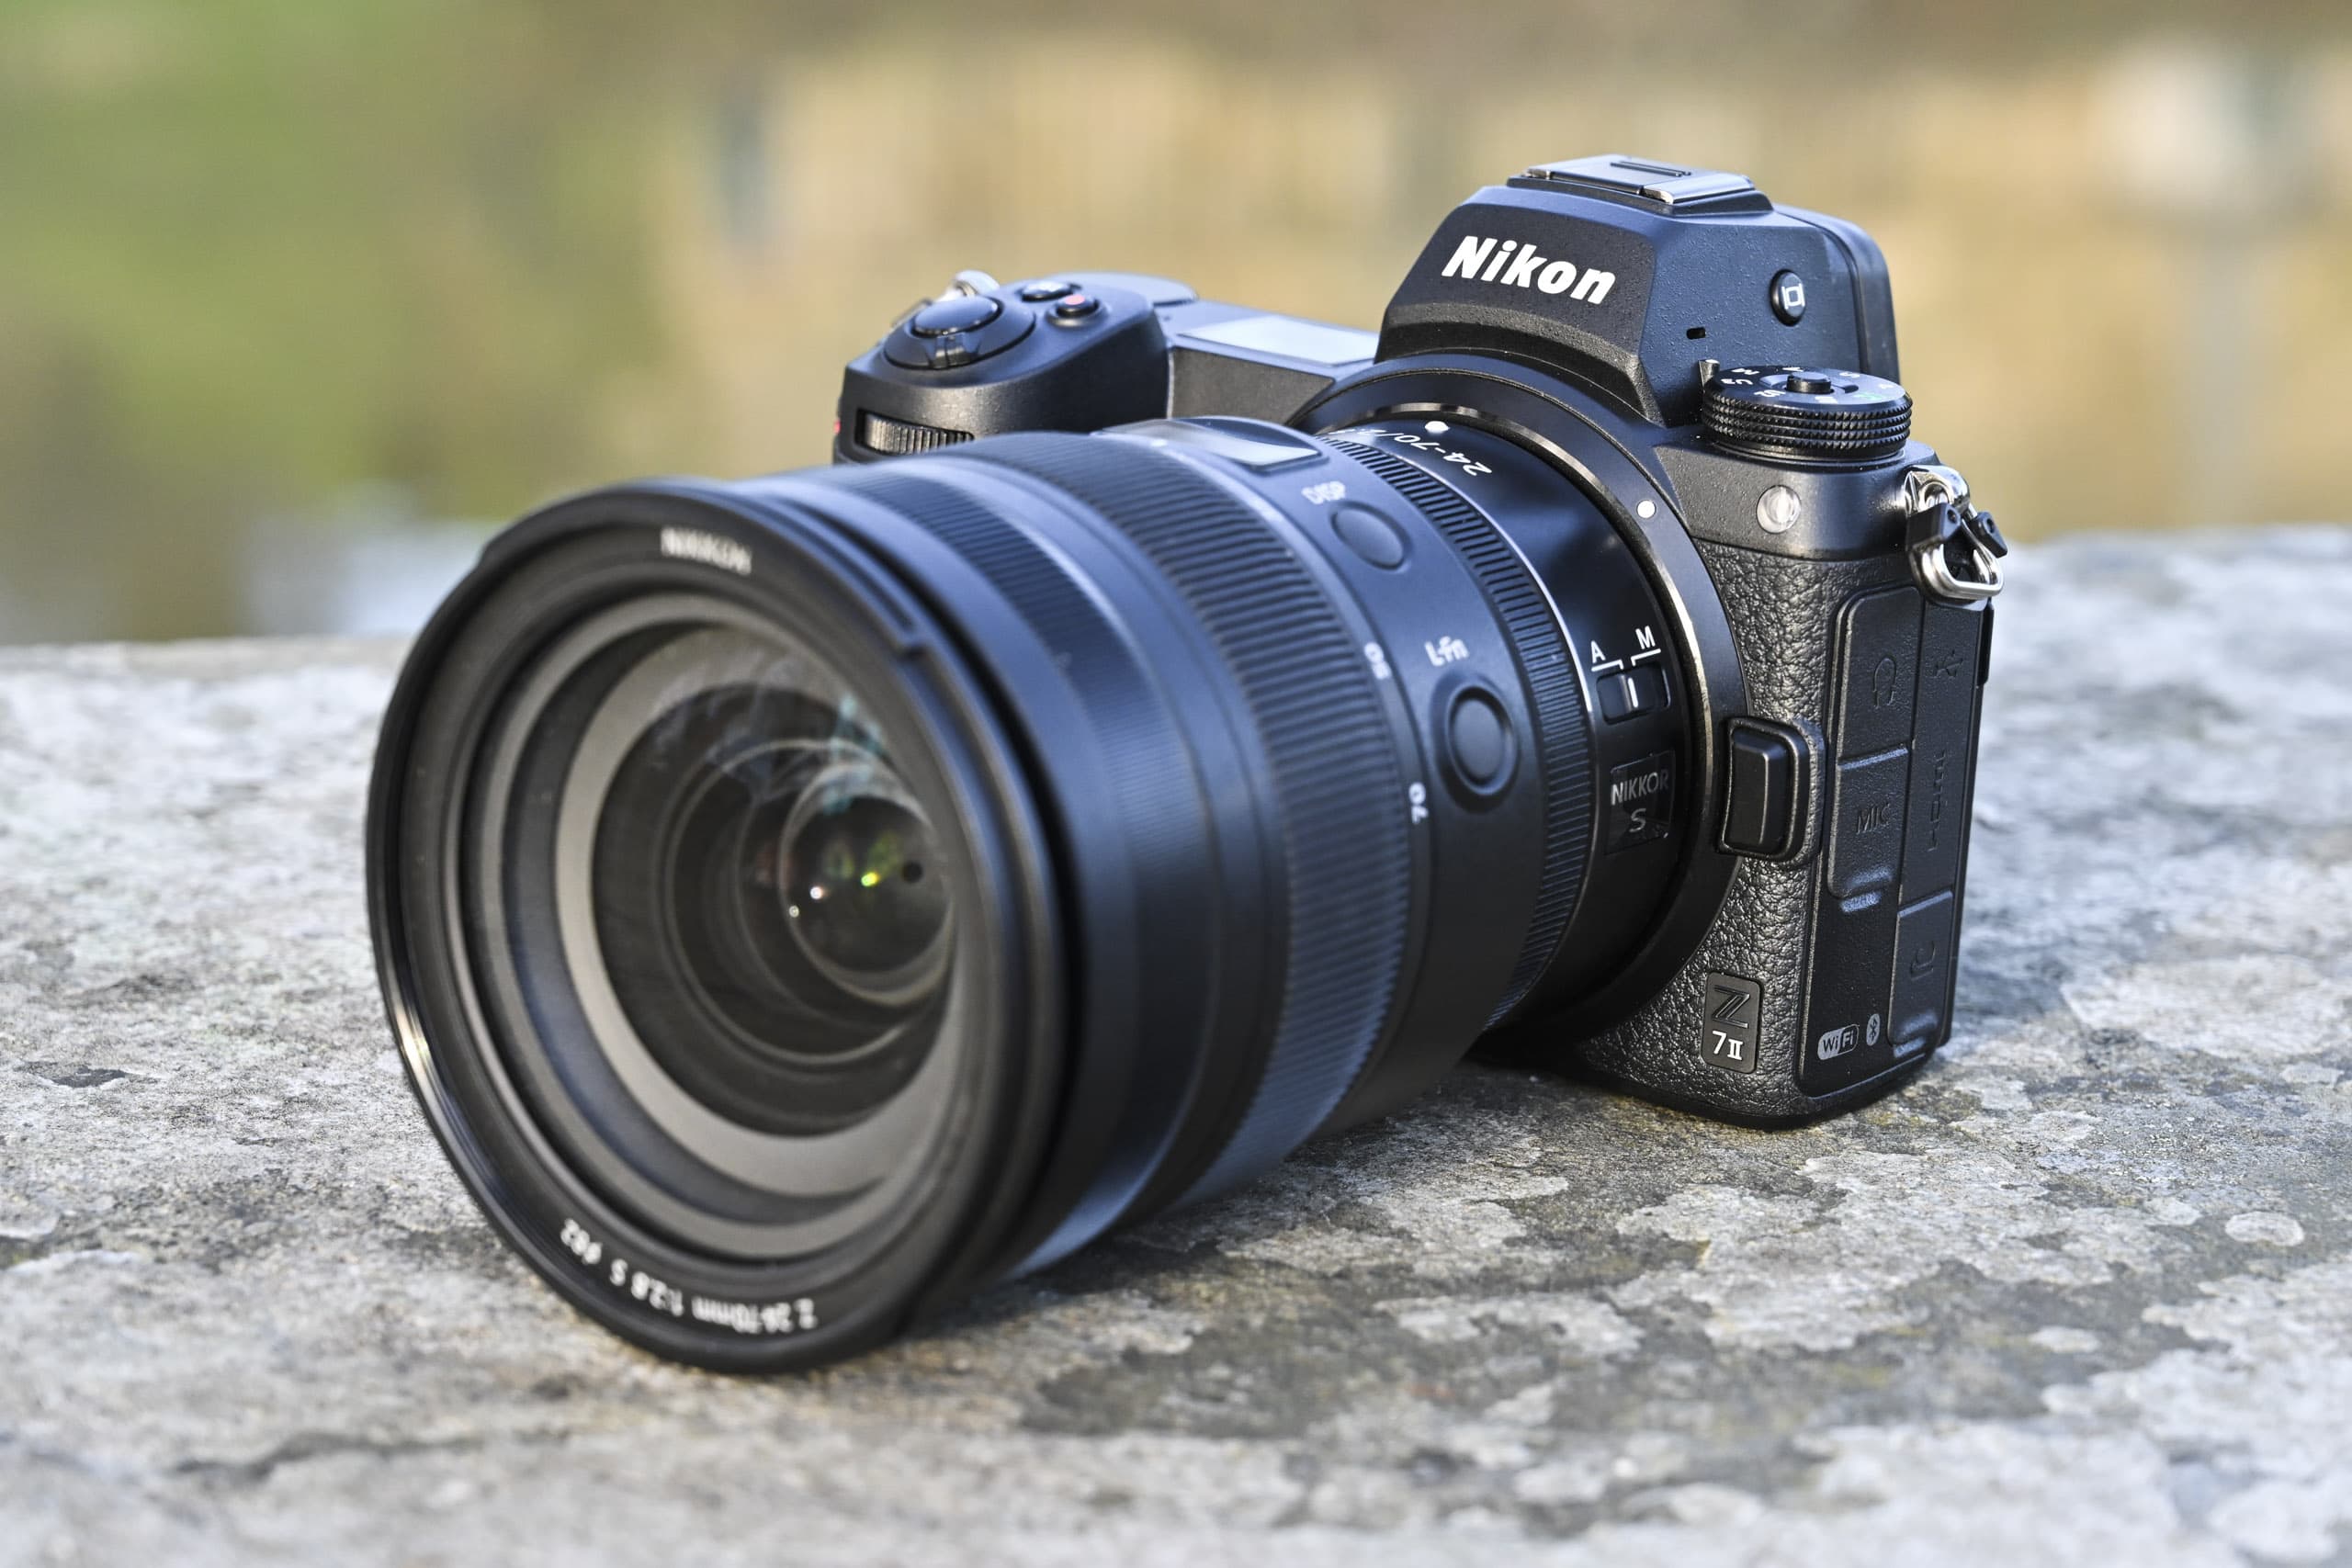 Nikon D850 Pro DSLR Rivals Medium Format Quality, Adds 4K Video - Adorama